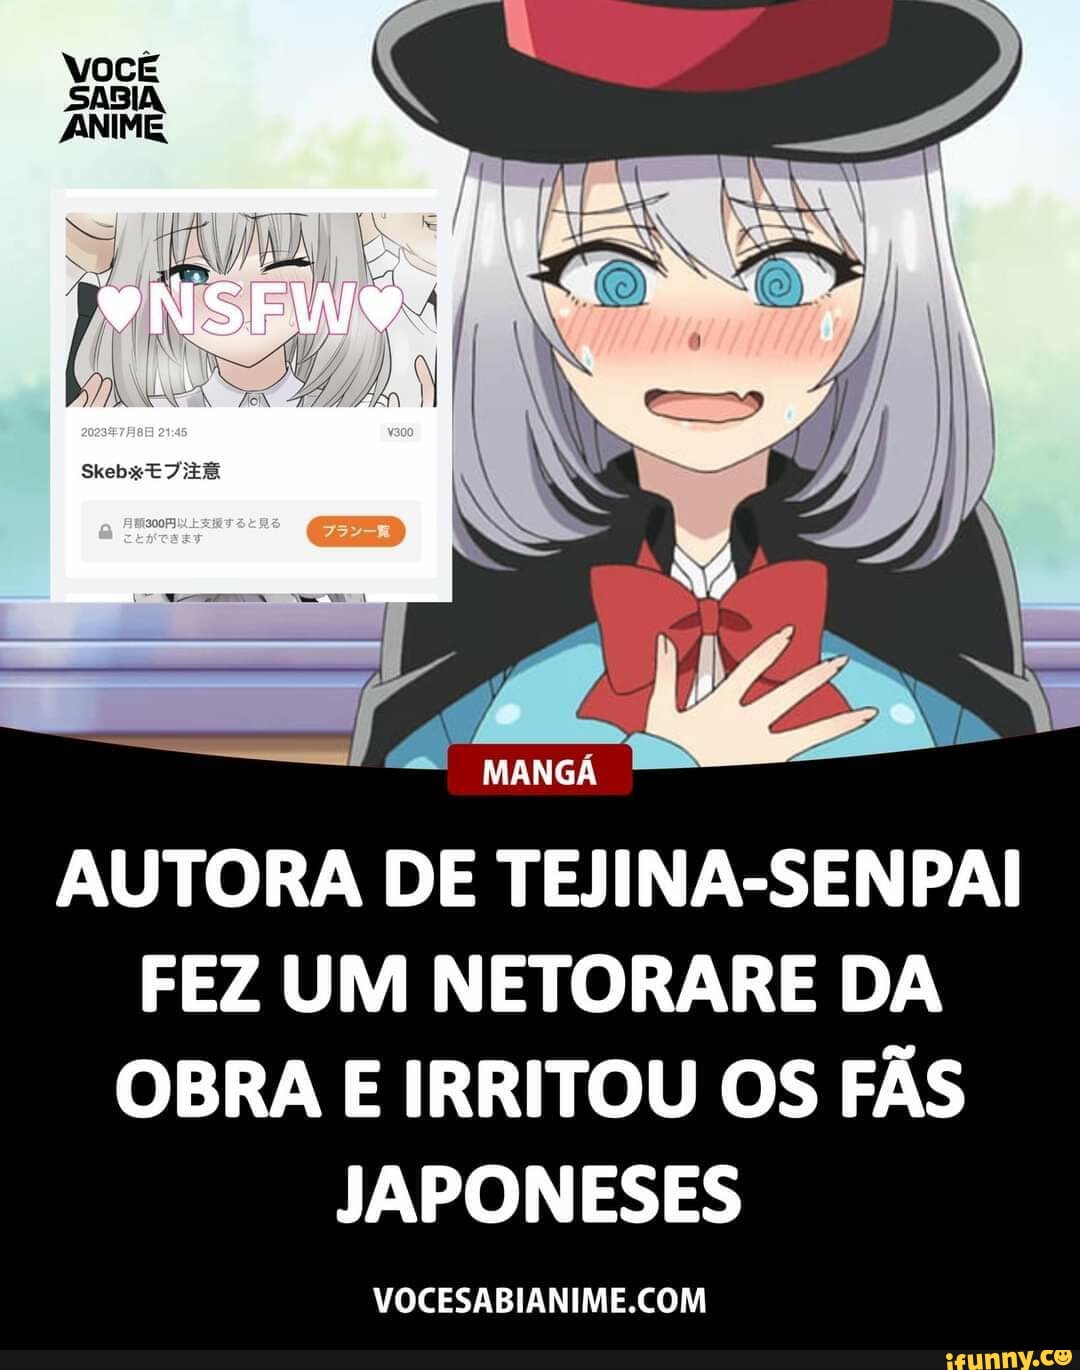 Memes en espanol tag, anime pictures on